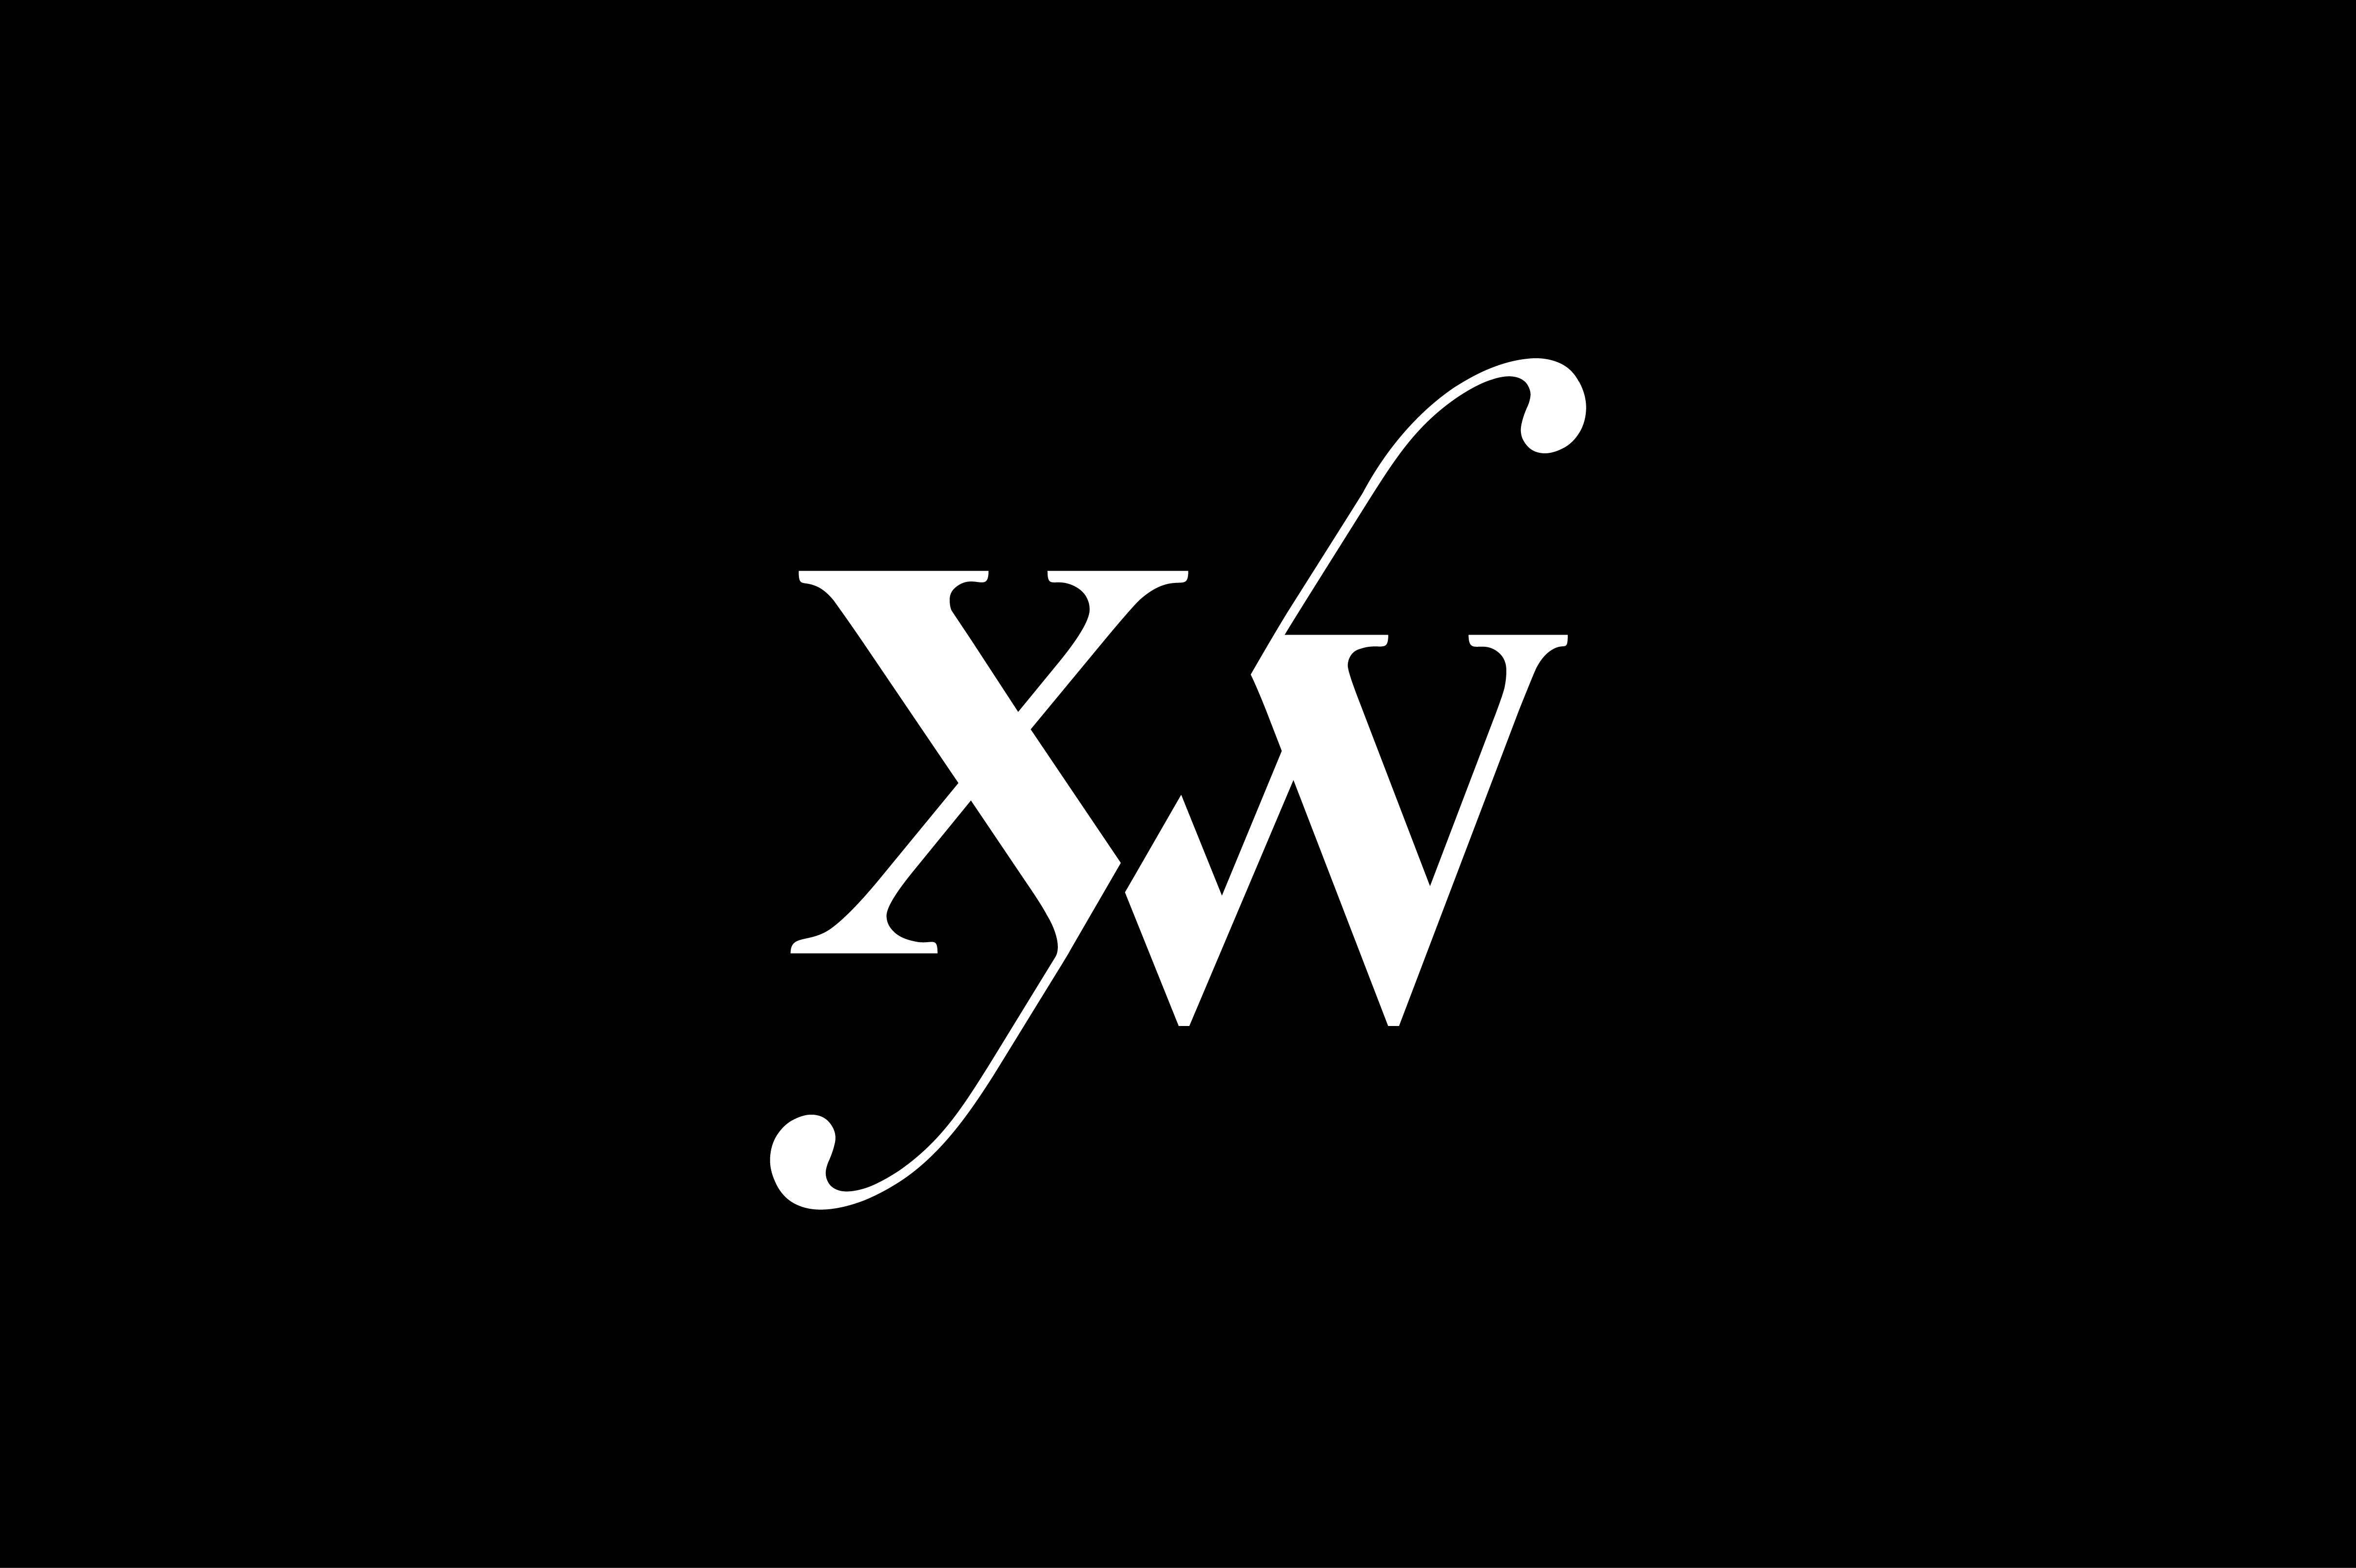 Xw Monogram Logo Design By Vectorseller Thehungryjpeg Com